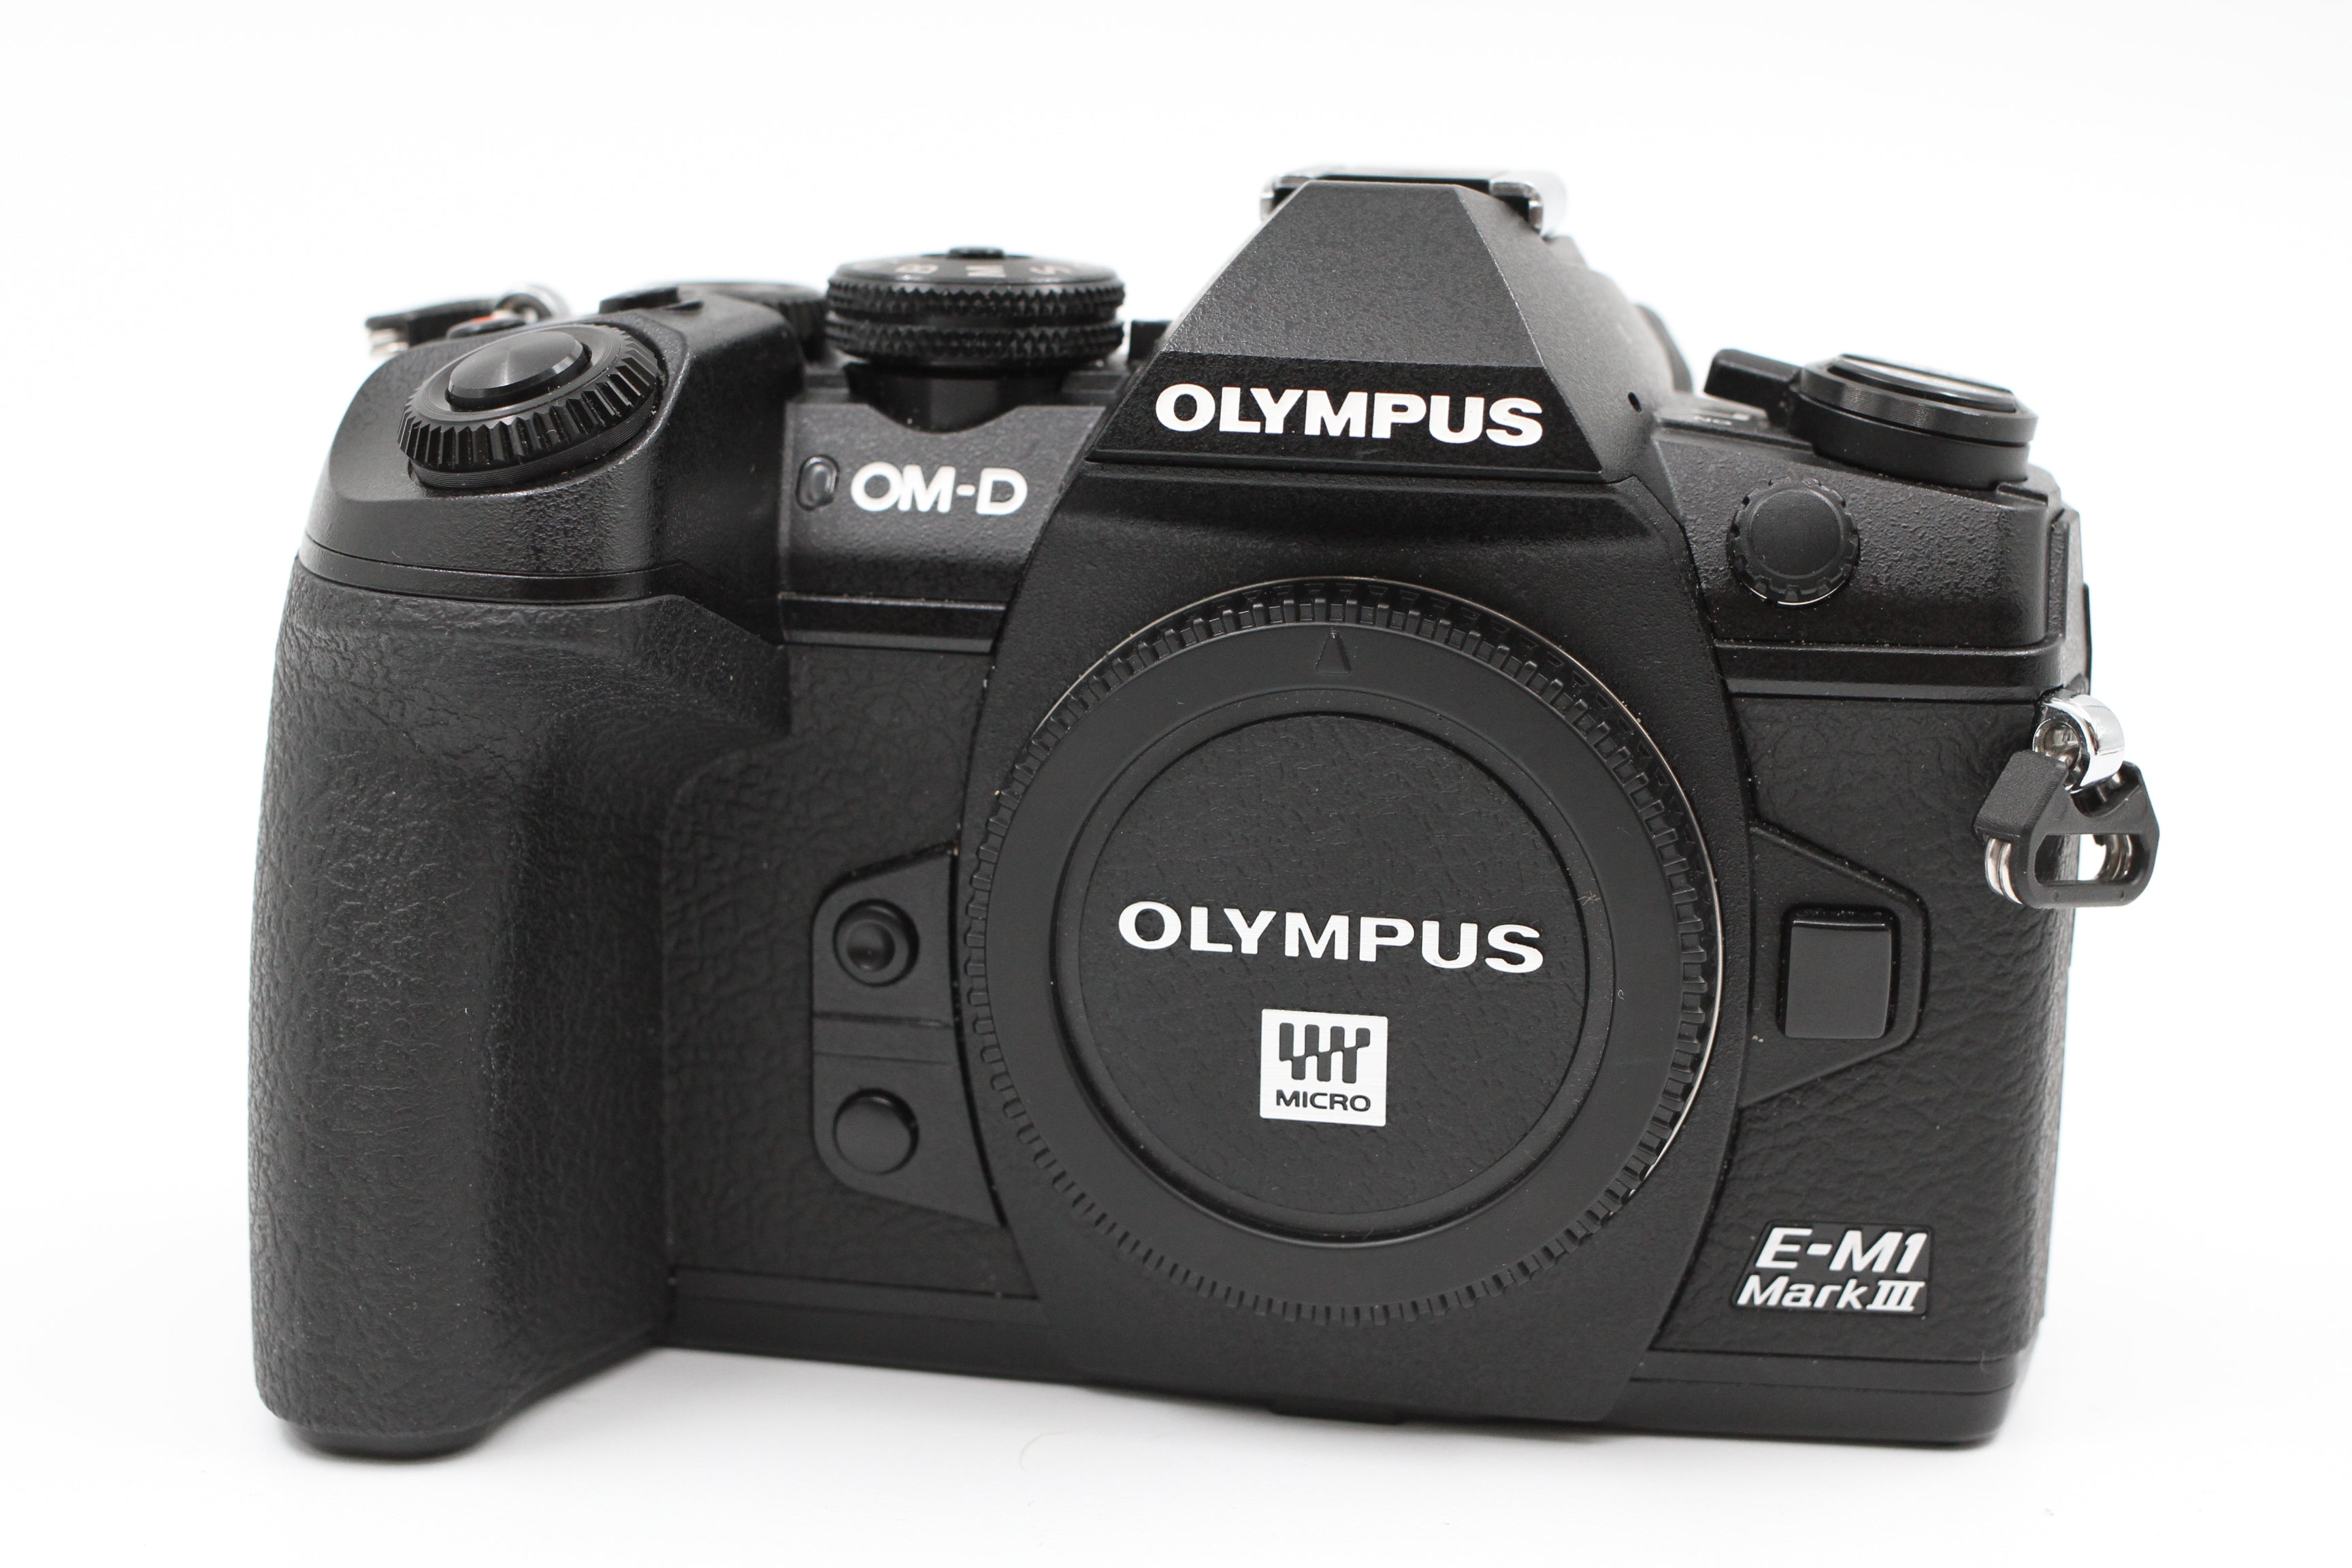 Olympus OM-D E-M1 Mark III m4/3 Mirrorless body, Boxed